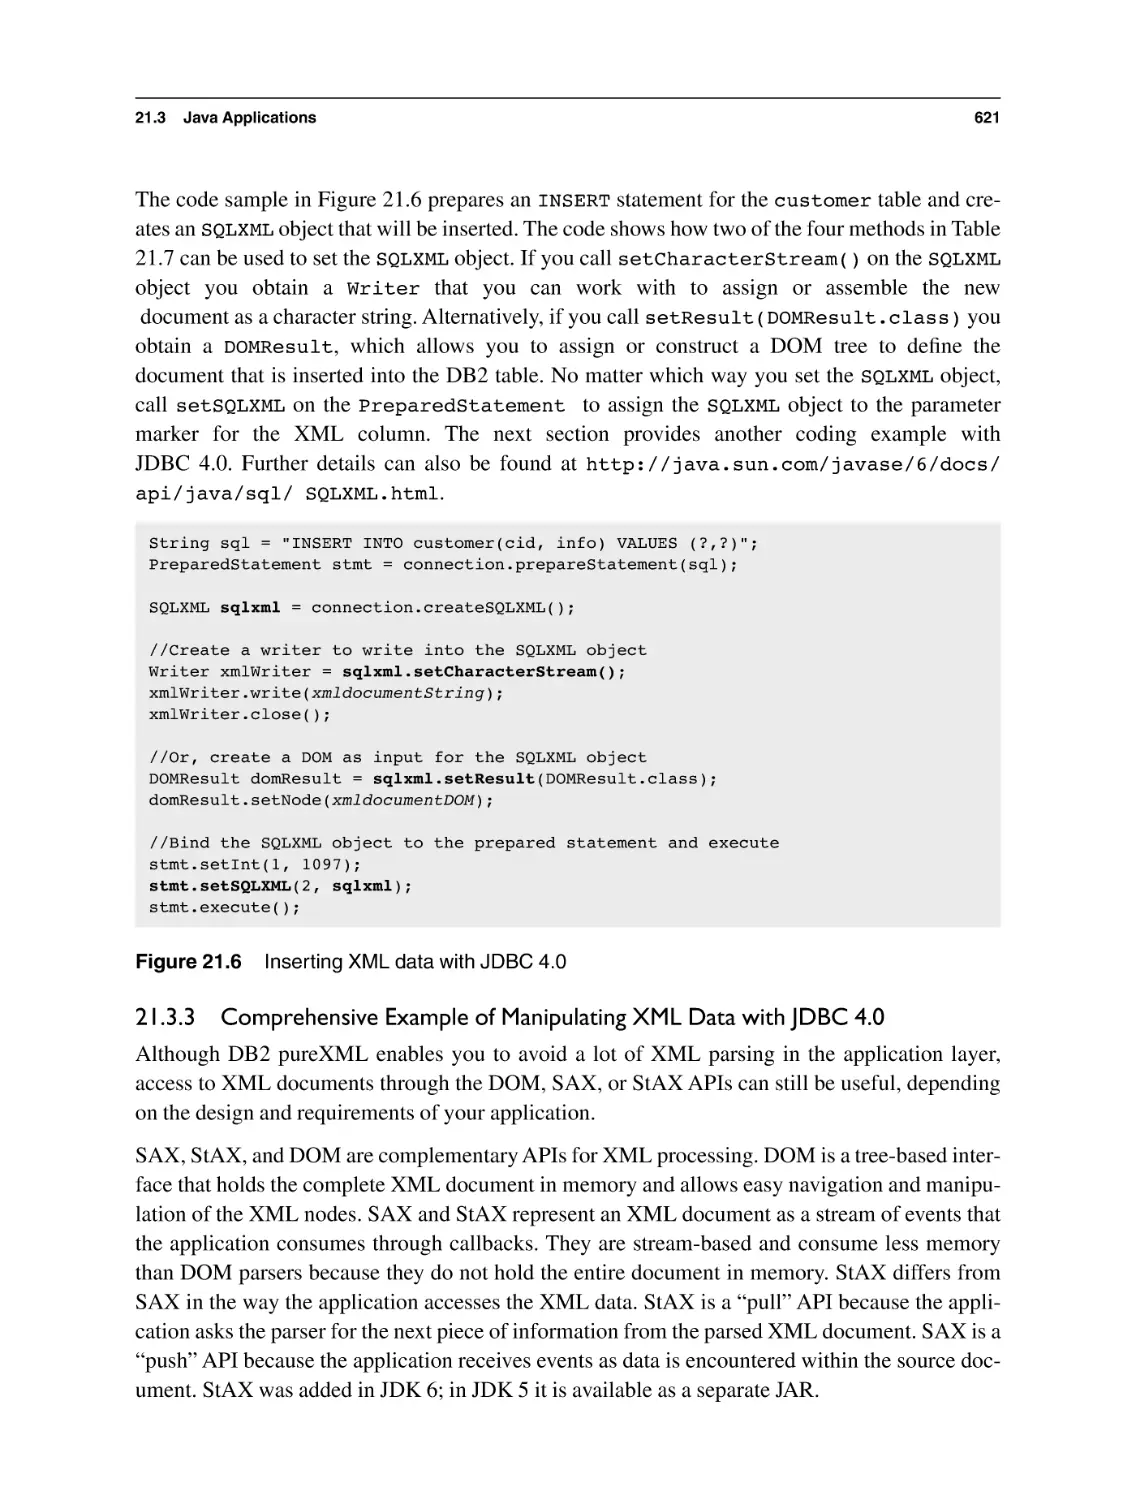 21.3.3 Comprehensive Example of Manipulating XML Data with JDBC 4.0